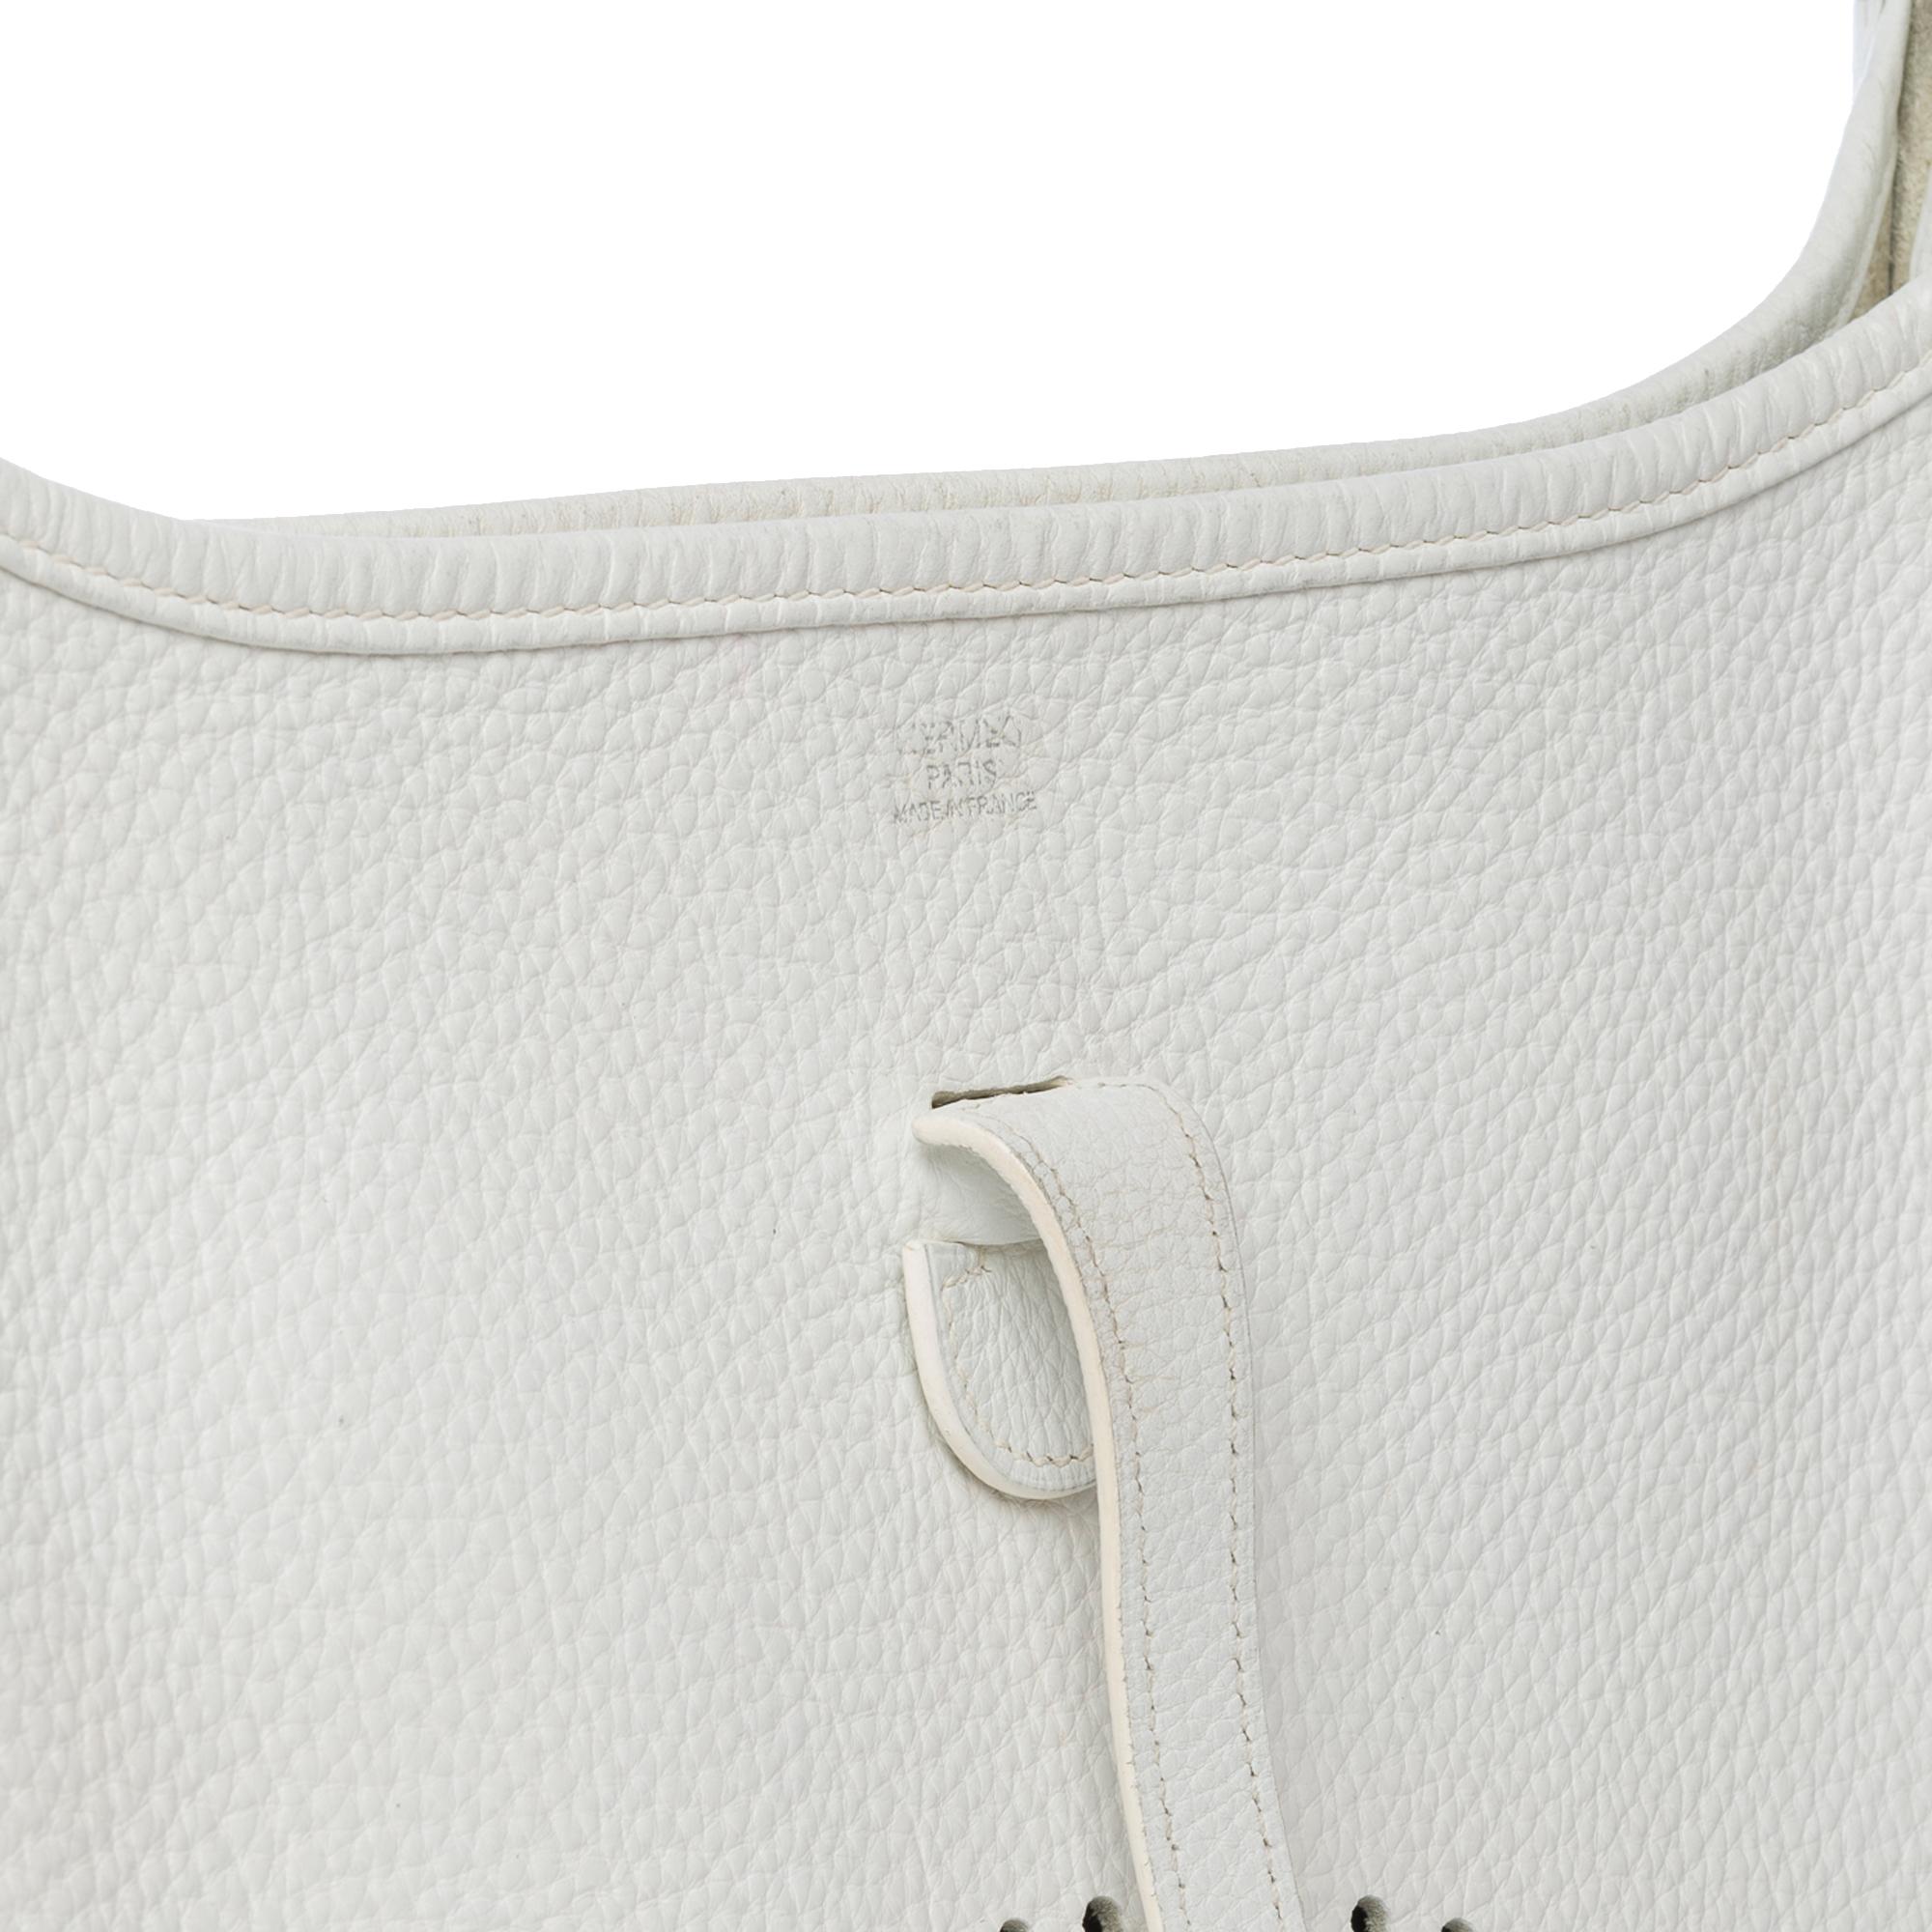 Gorgeous Hermès Evelyne 29  shoulder bag in White Taurillon leather, SHW 2